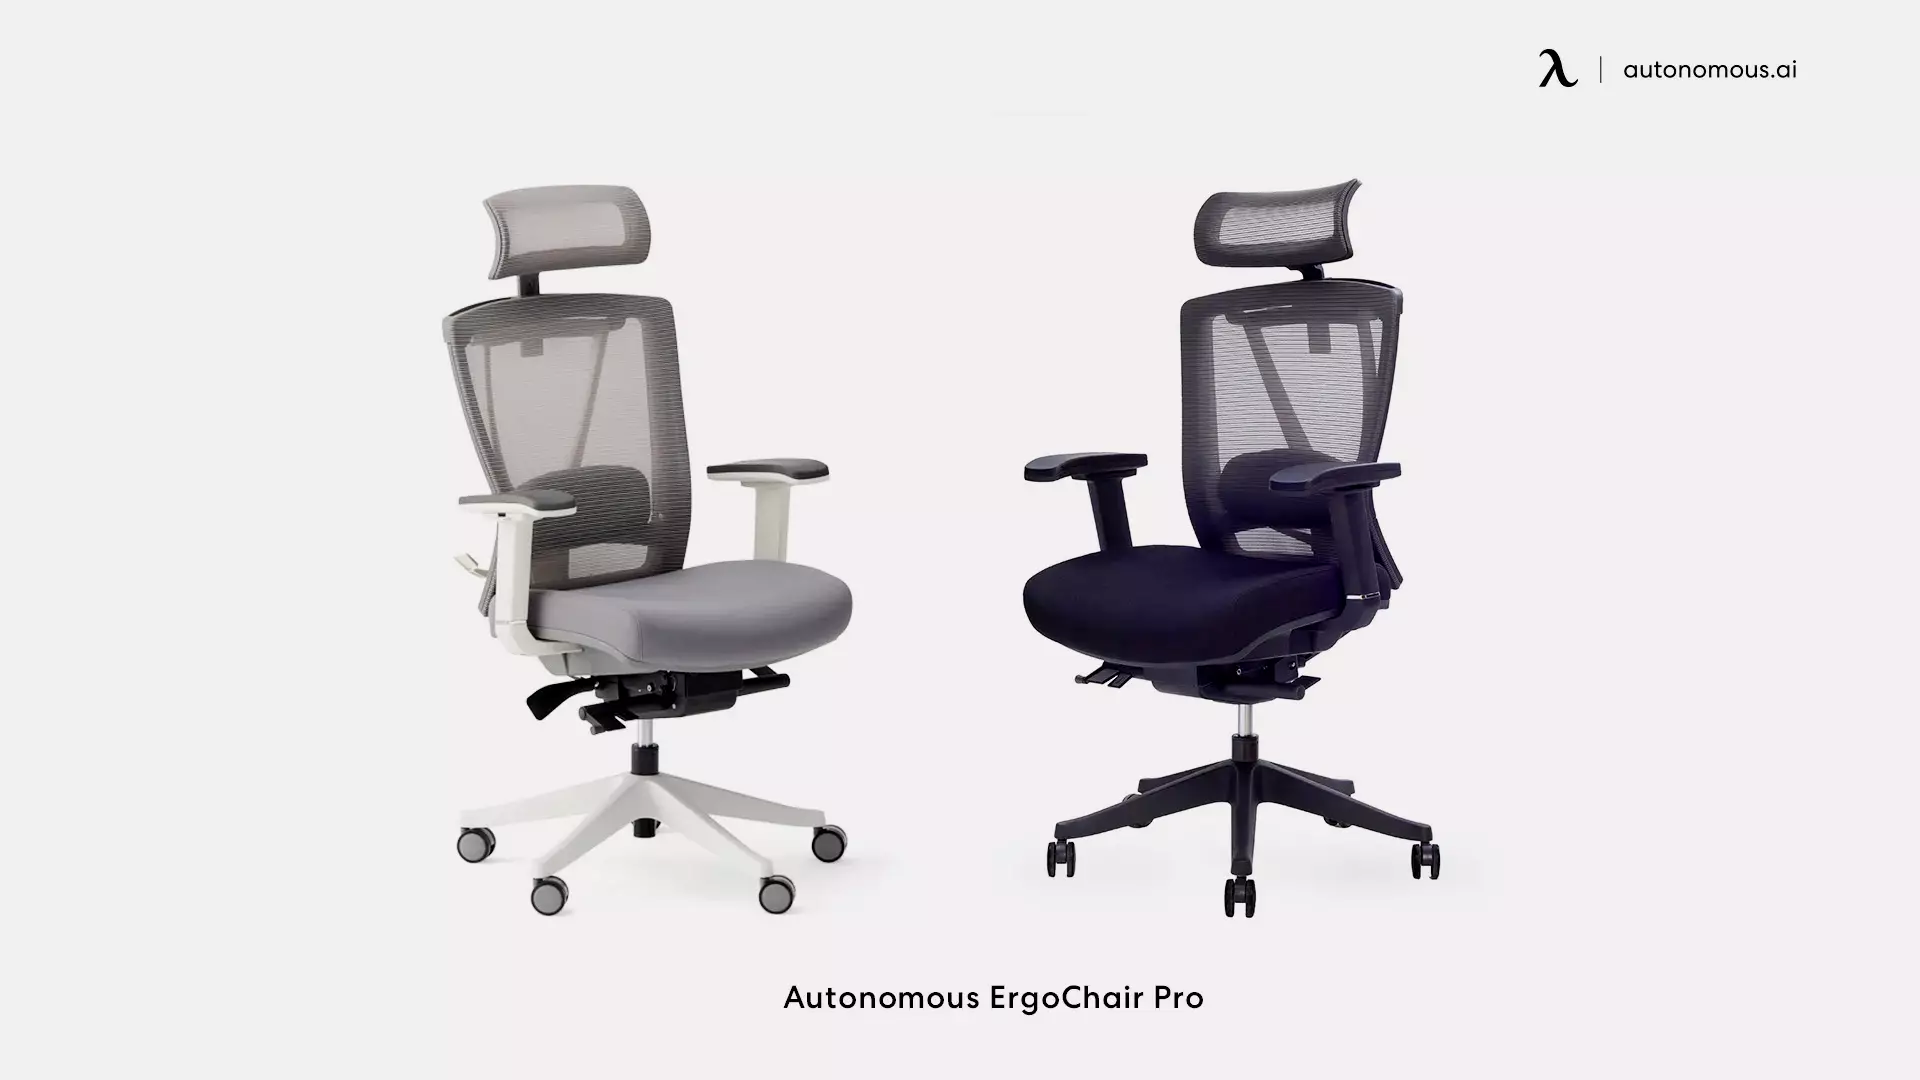 ErgoChair Pro by Autonomous mesh office chair